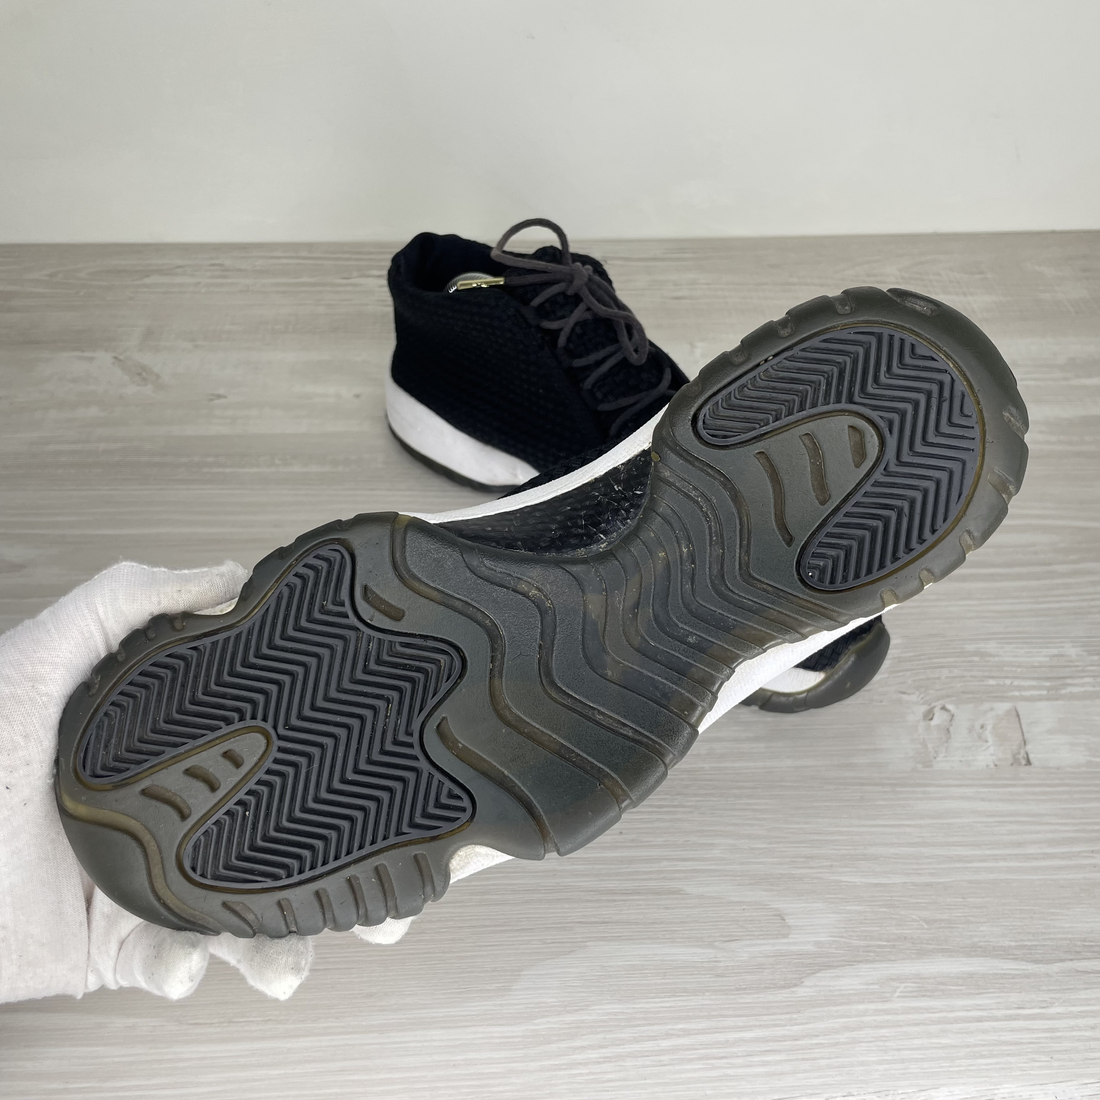 Jordan Sneakers, Future Black White (44)